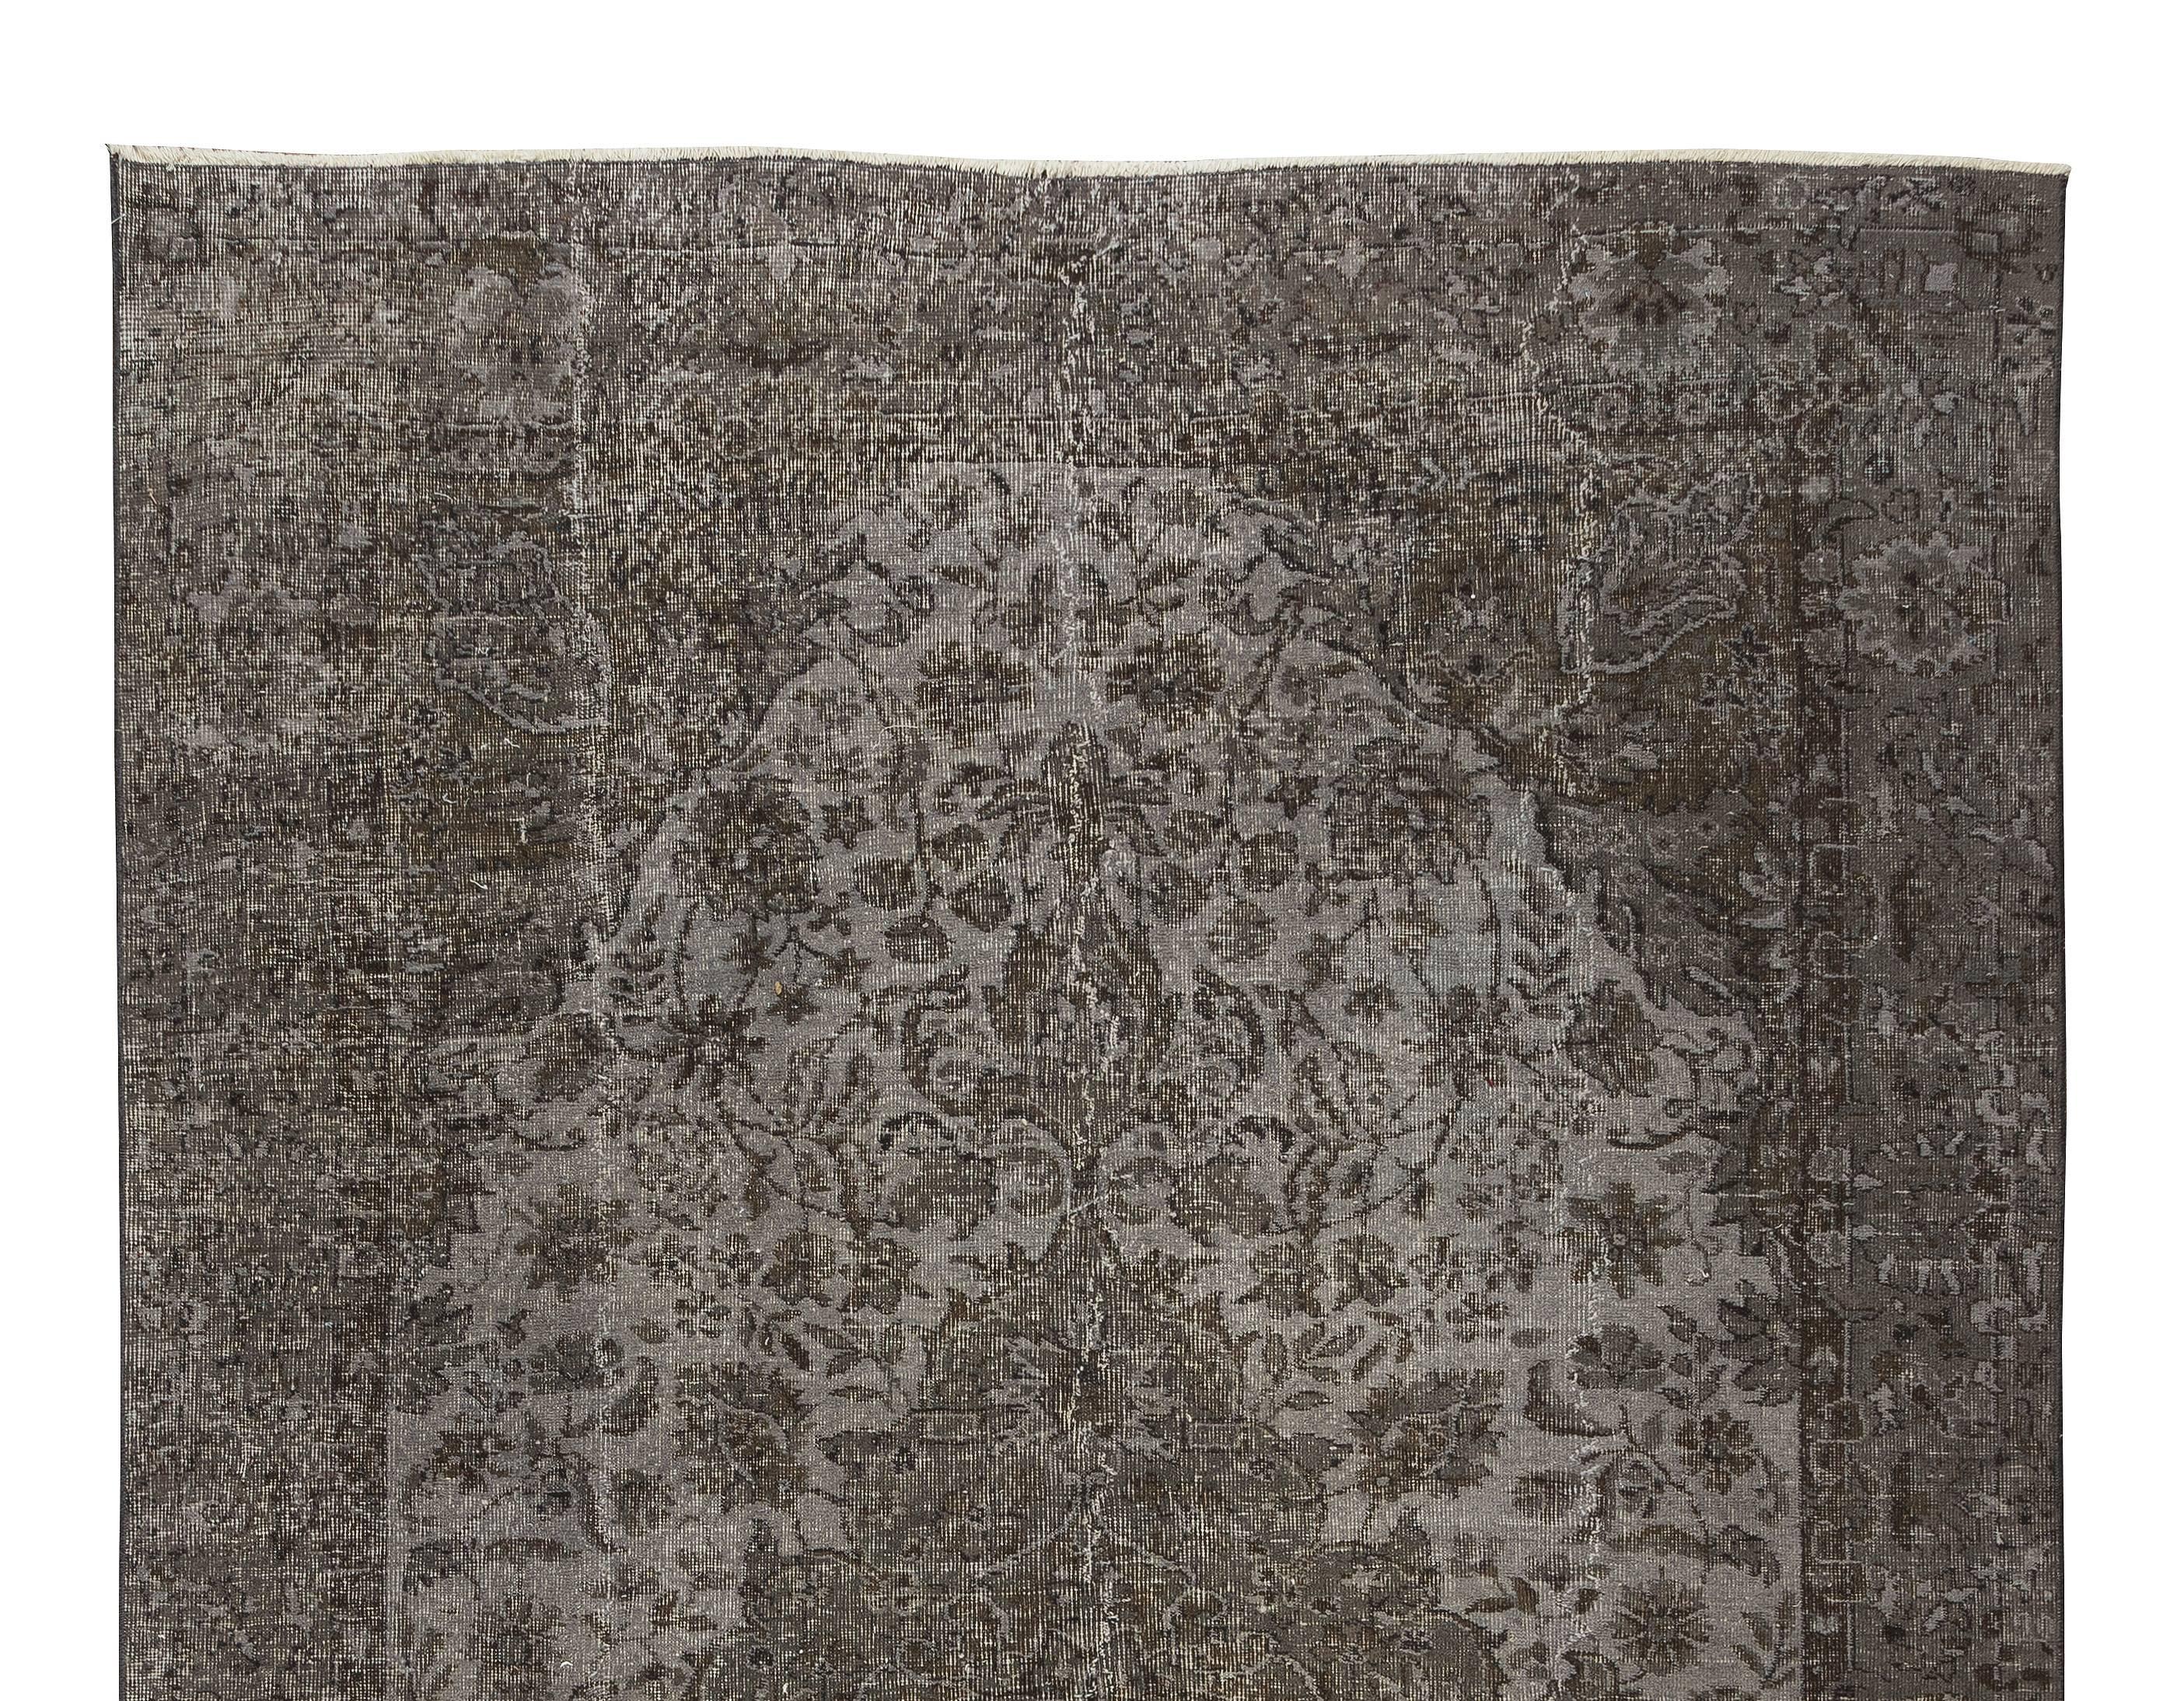 Turkish Handmade Vintage Anatolian Wool Rug in Gray, Dining Room Carpet For Sale